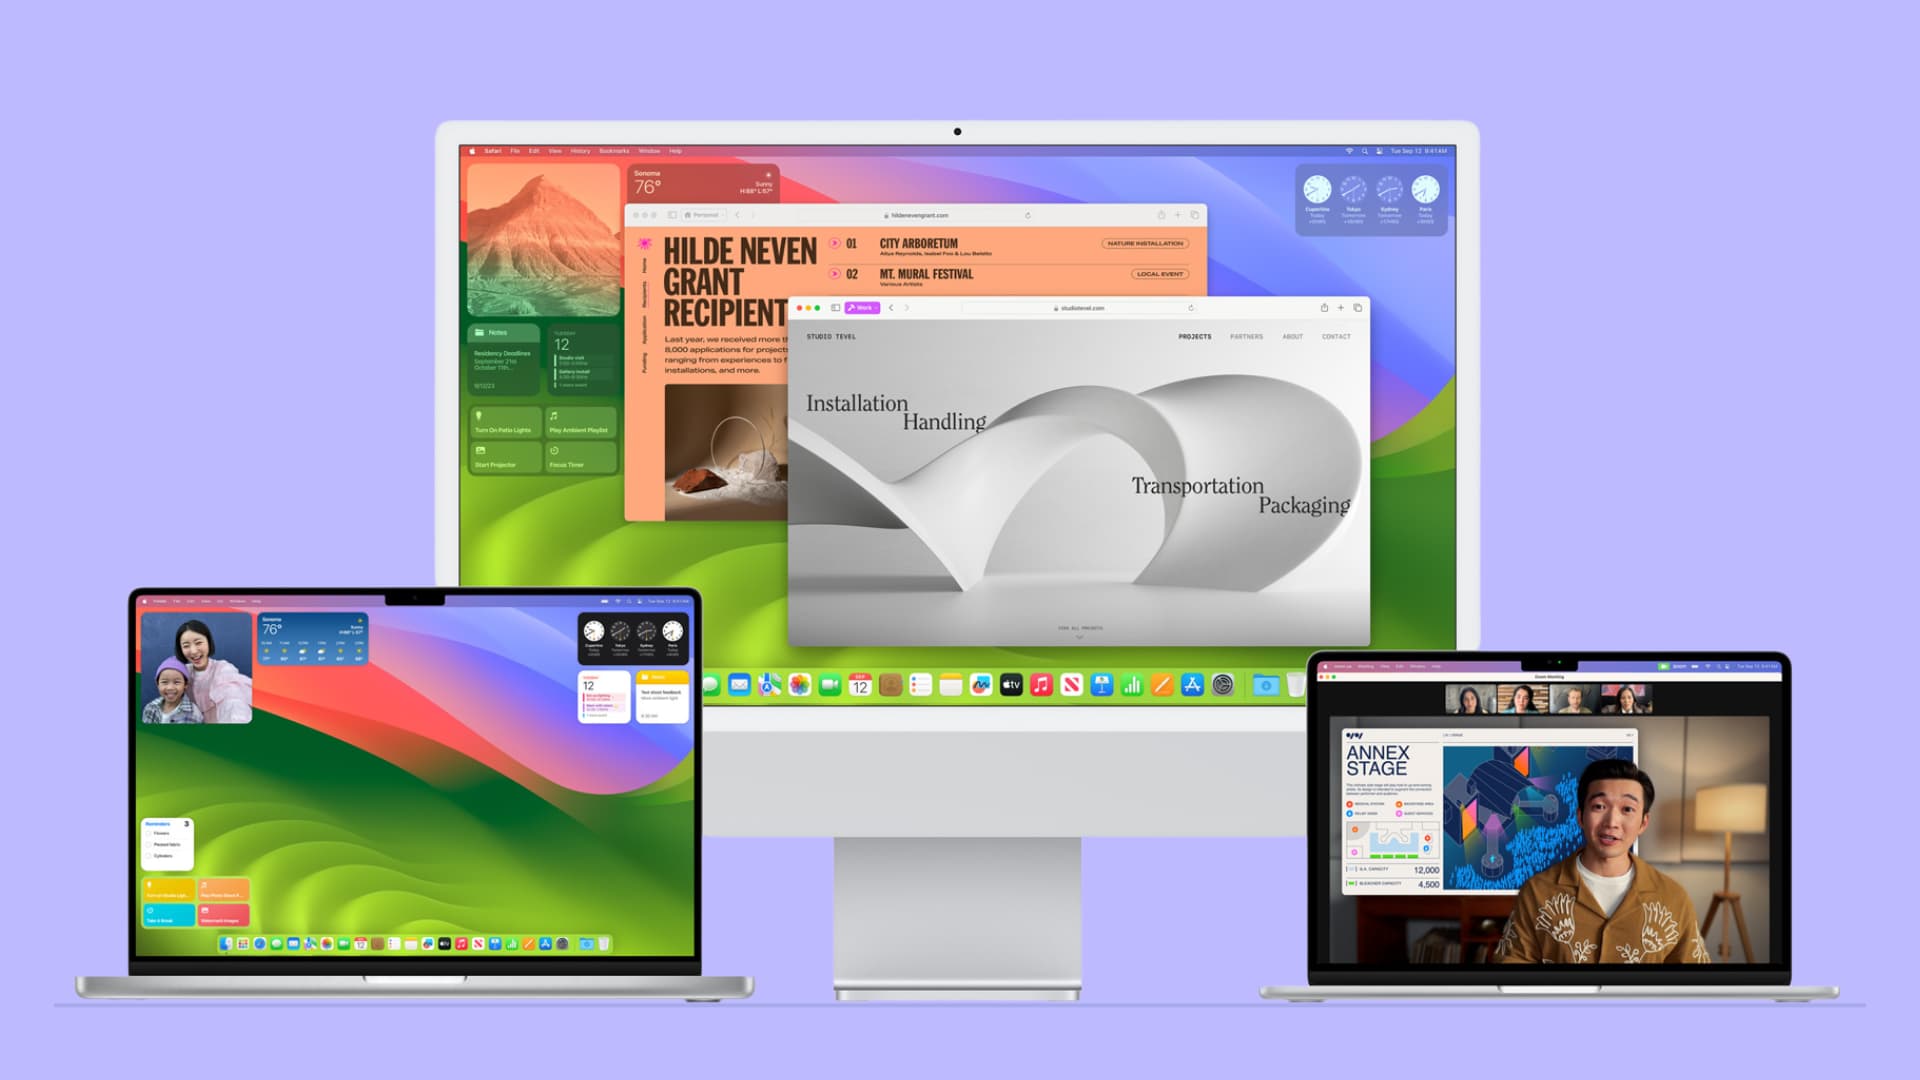 MacBook Pro, iMac, and MacBook Air running macOS Sonoma